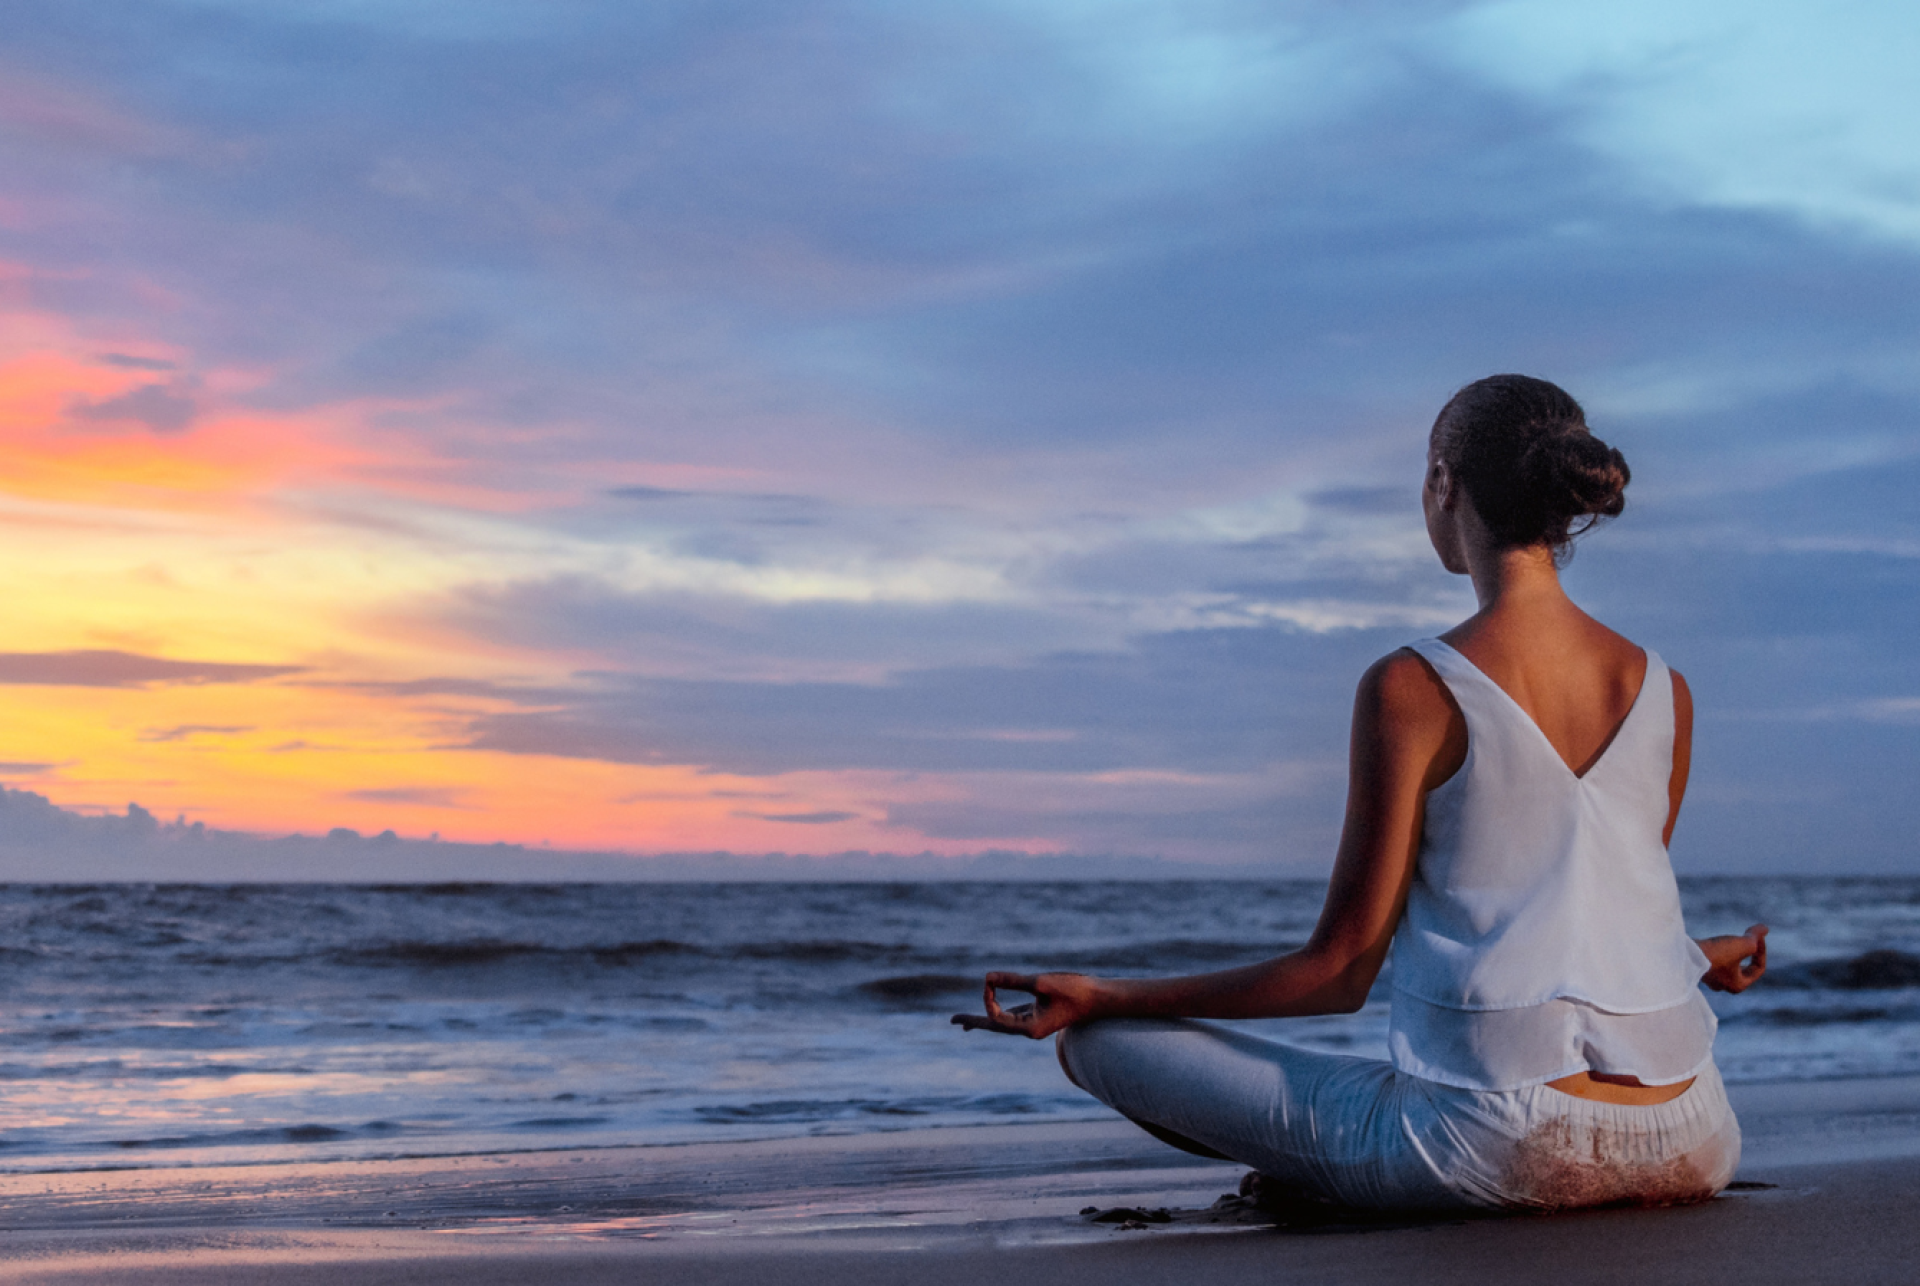 Woman Meditating on the beach